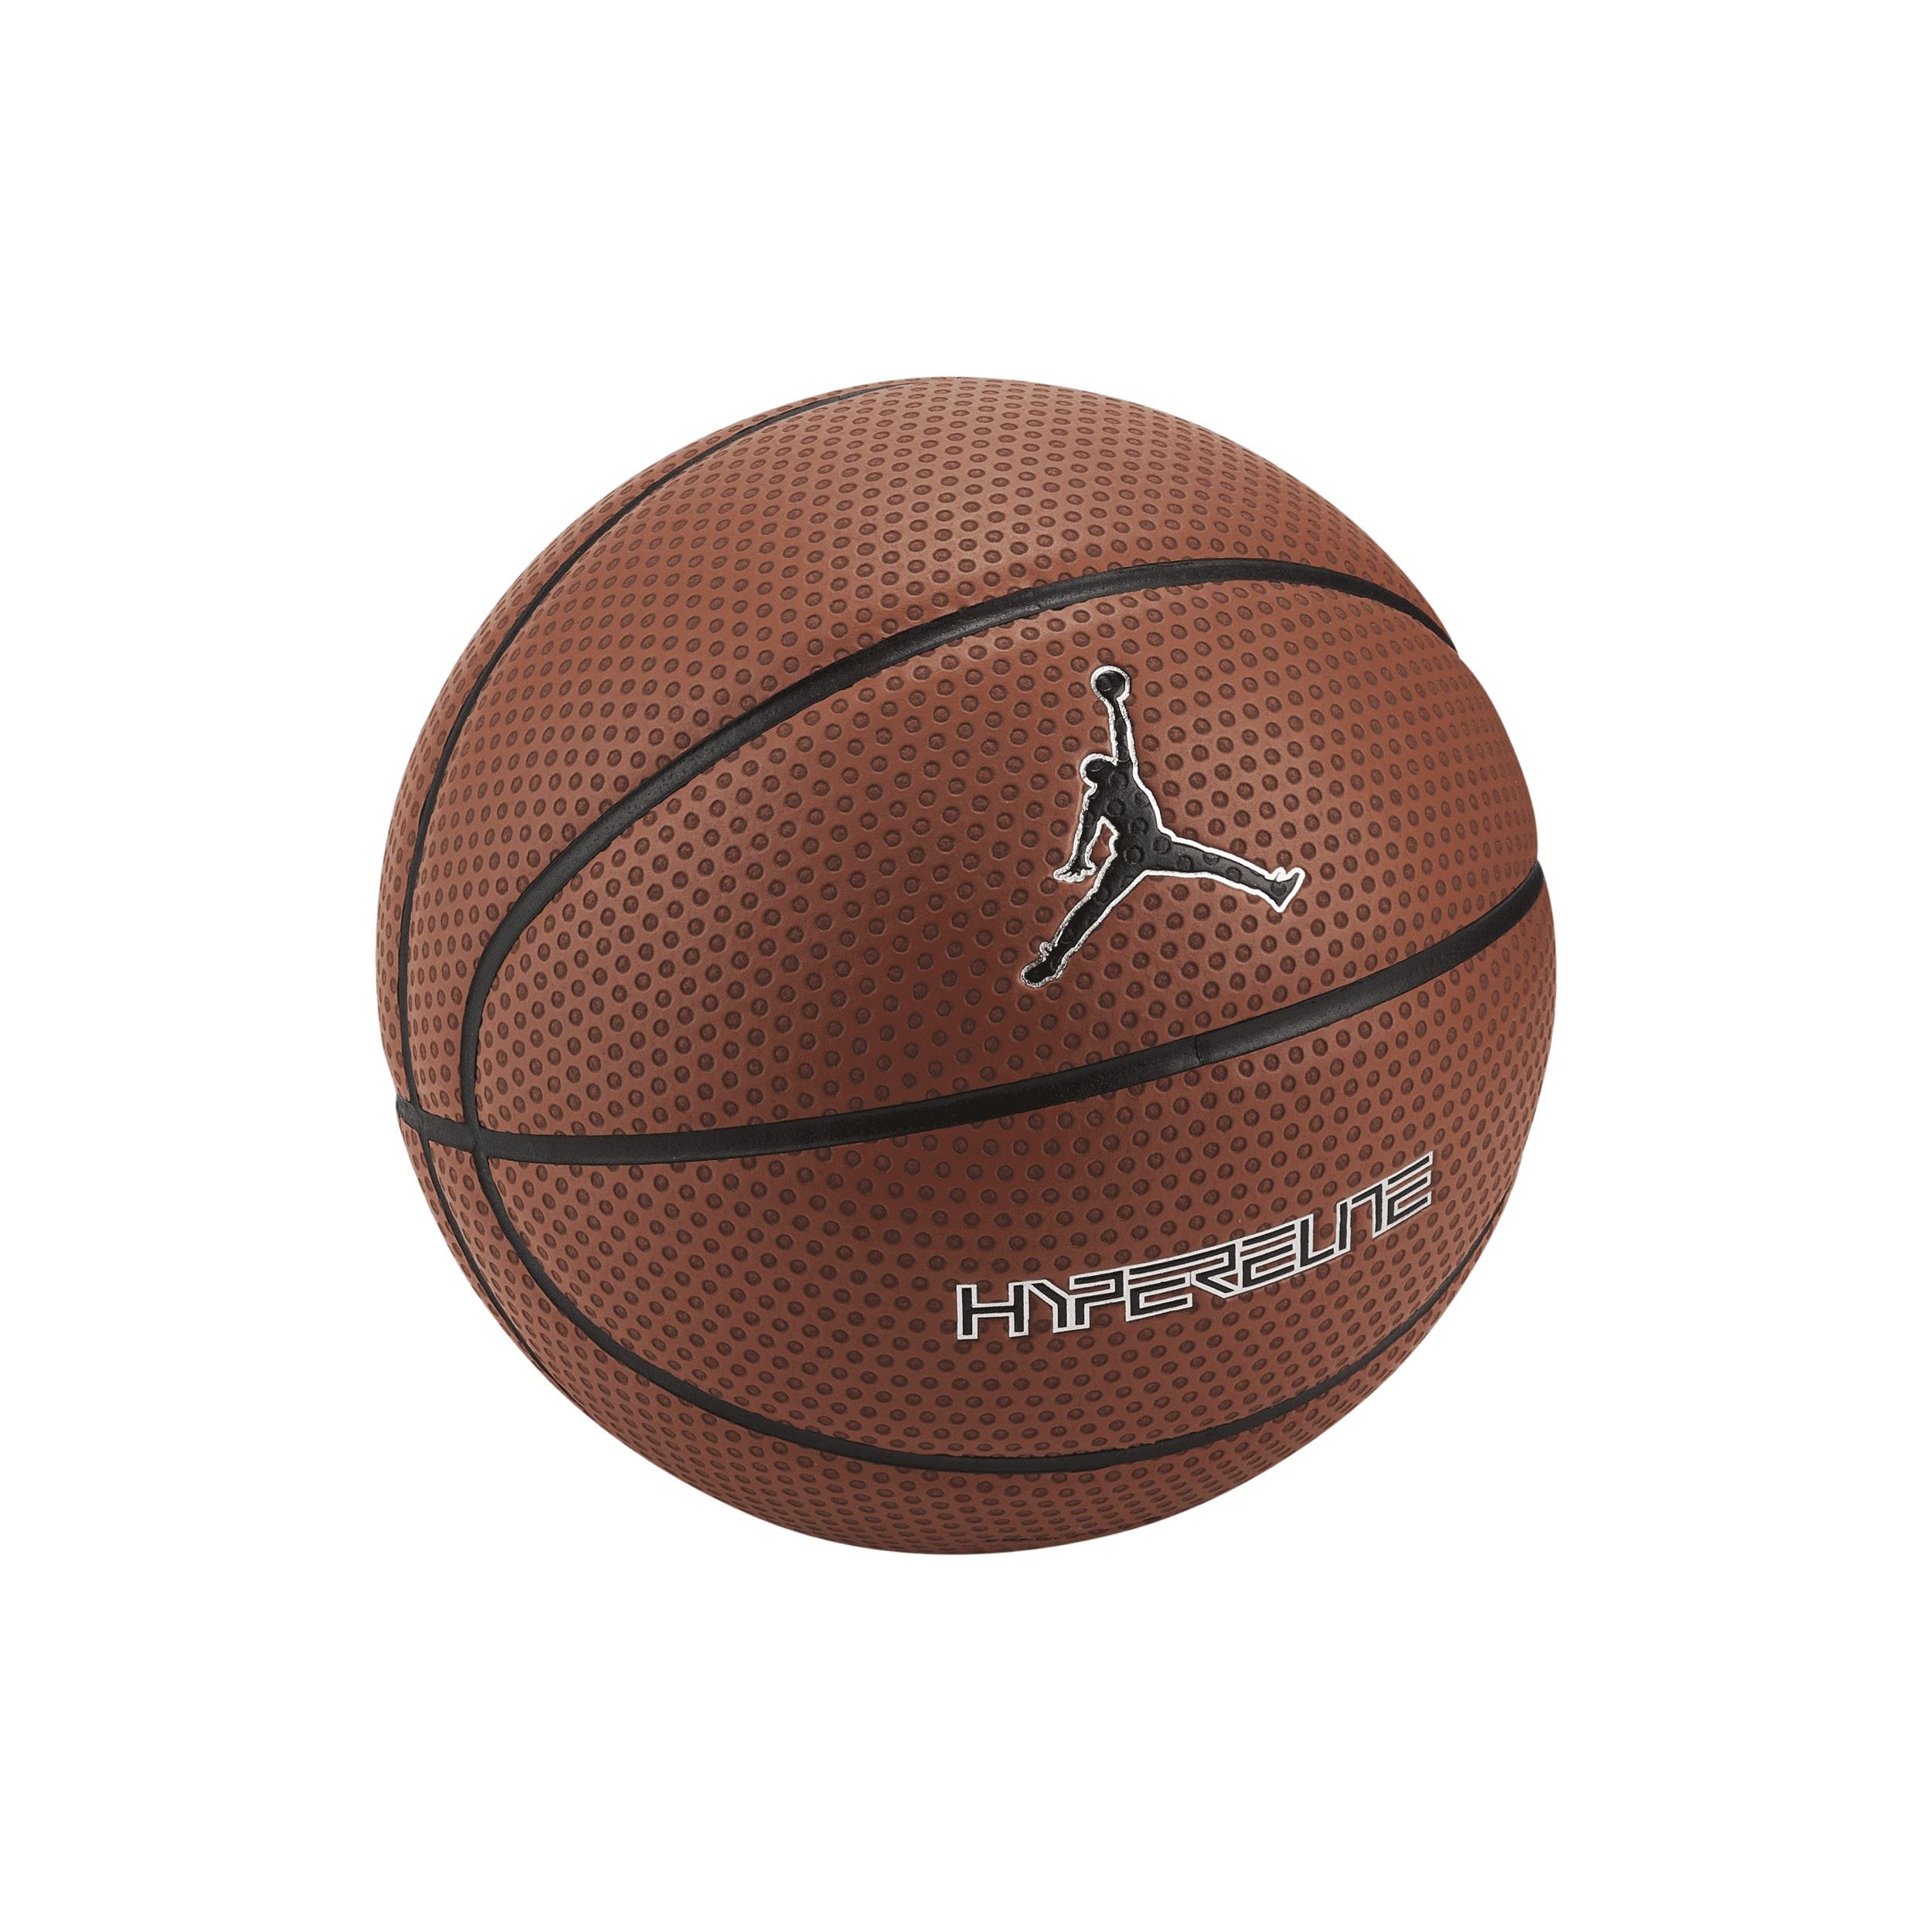 Jordan Hyper Elite 8P Basketball (Size 7) by JORDAN